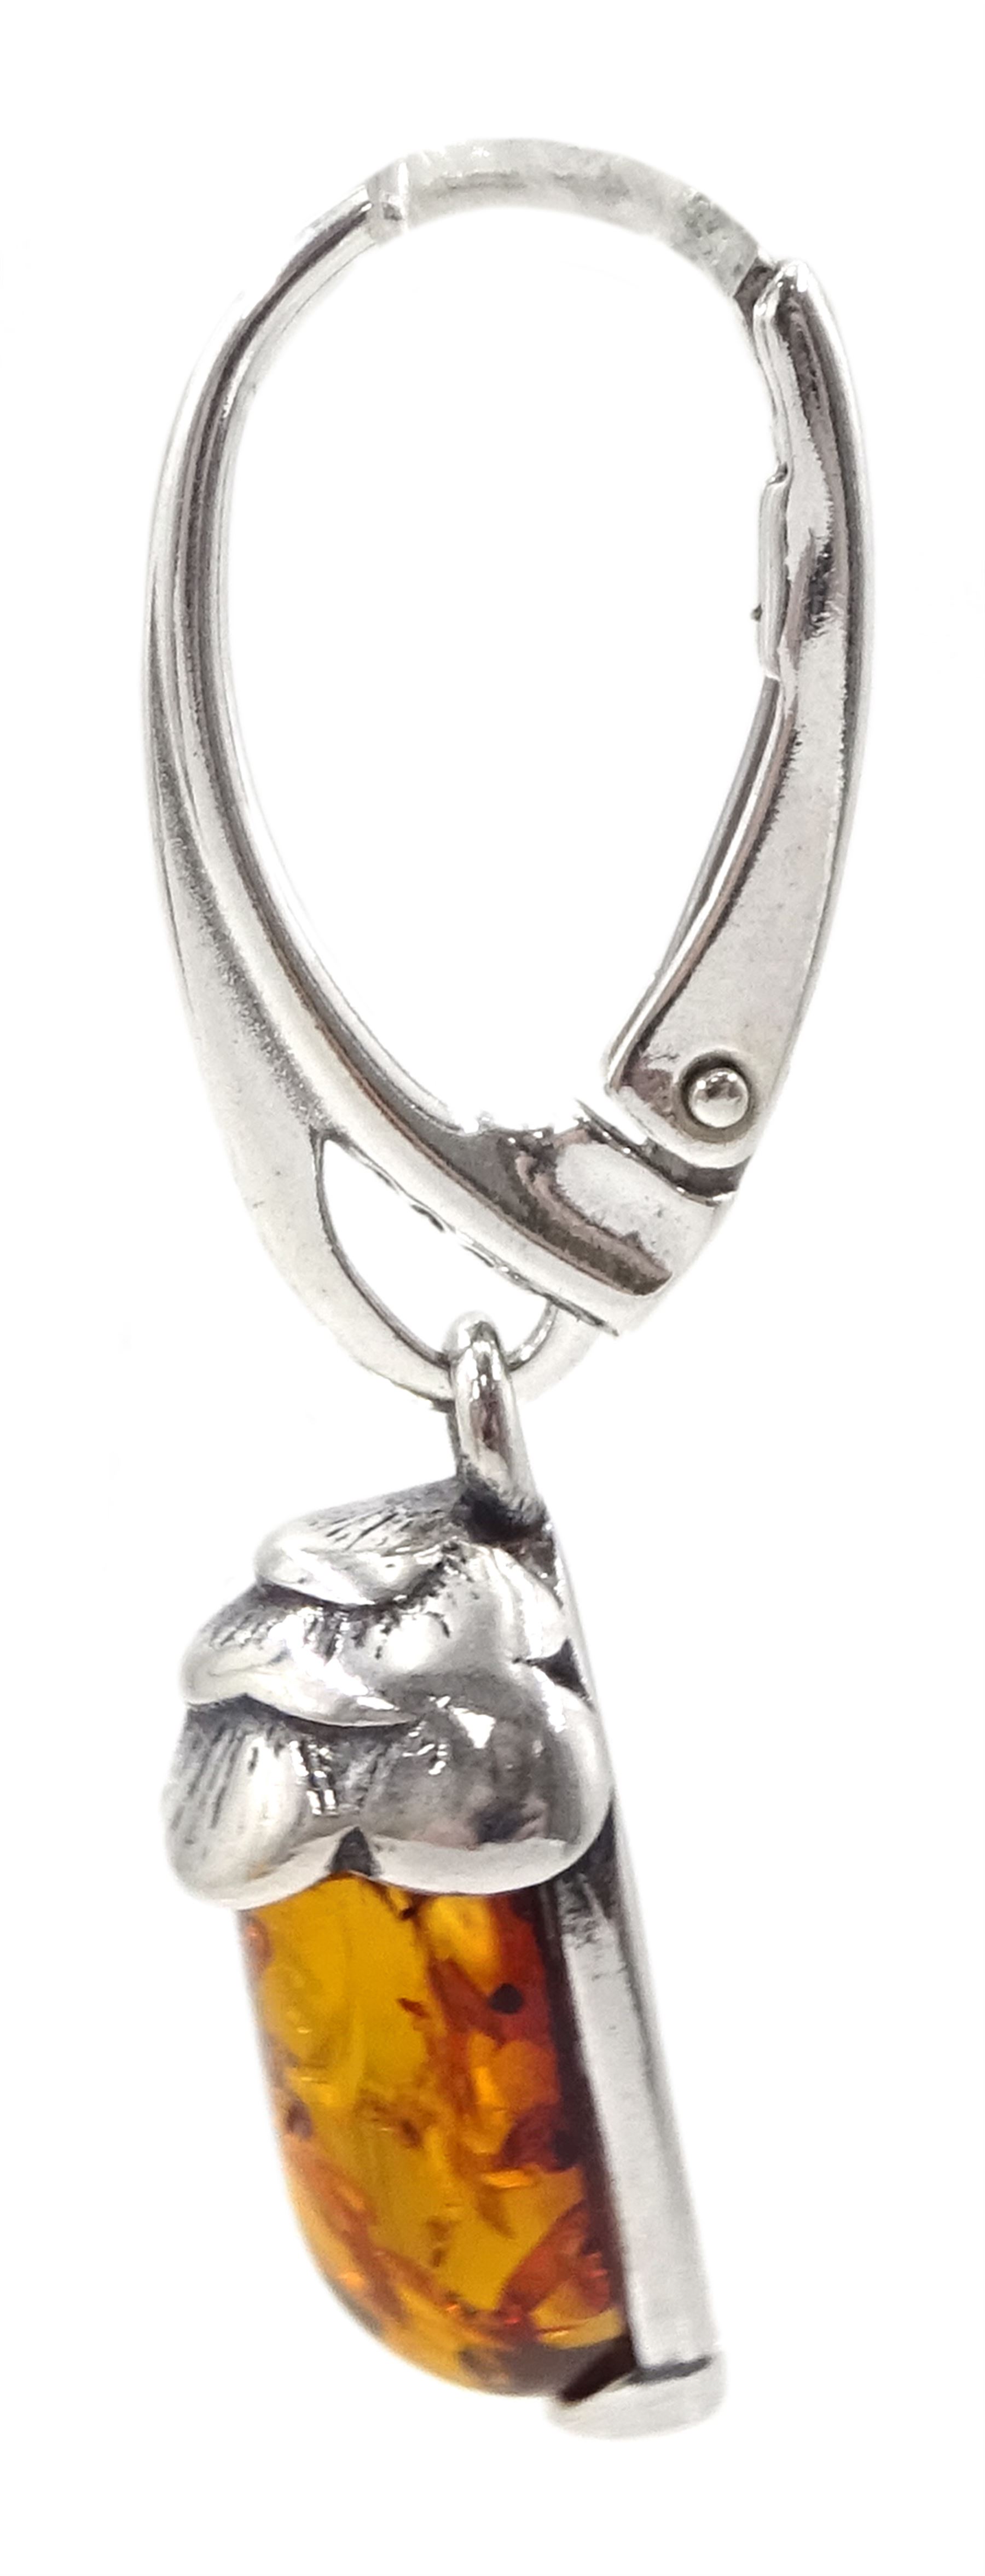 Pair of silver Baltic amber acorn pendant earrings - Image 2 of 2